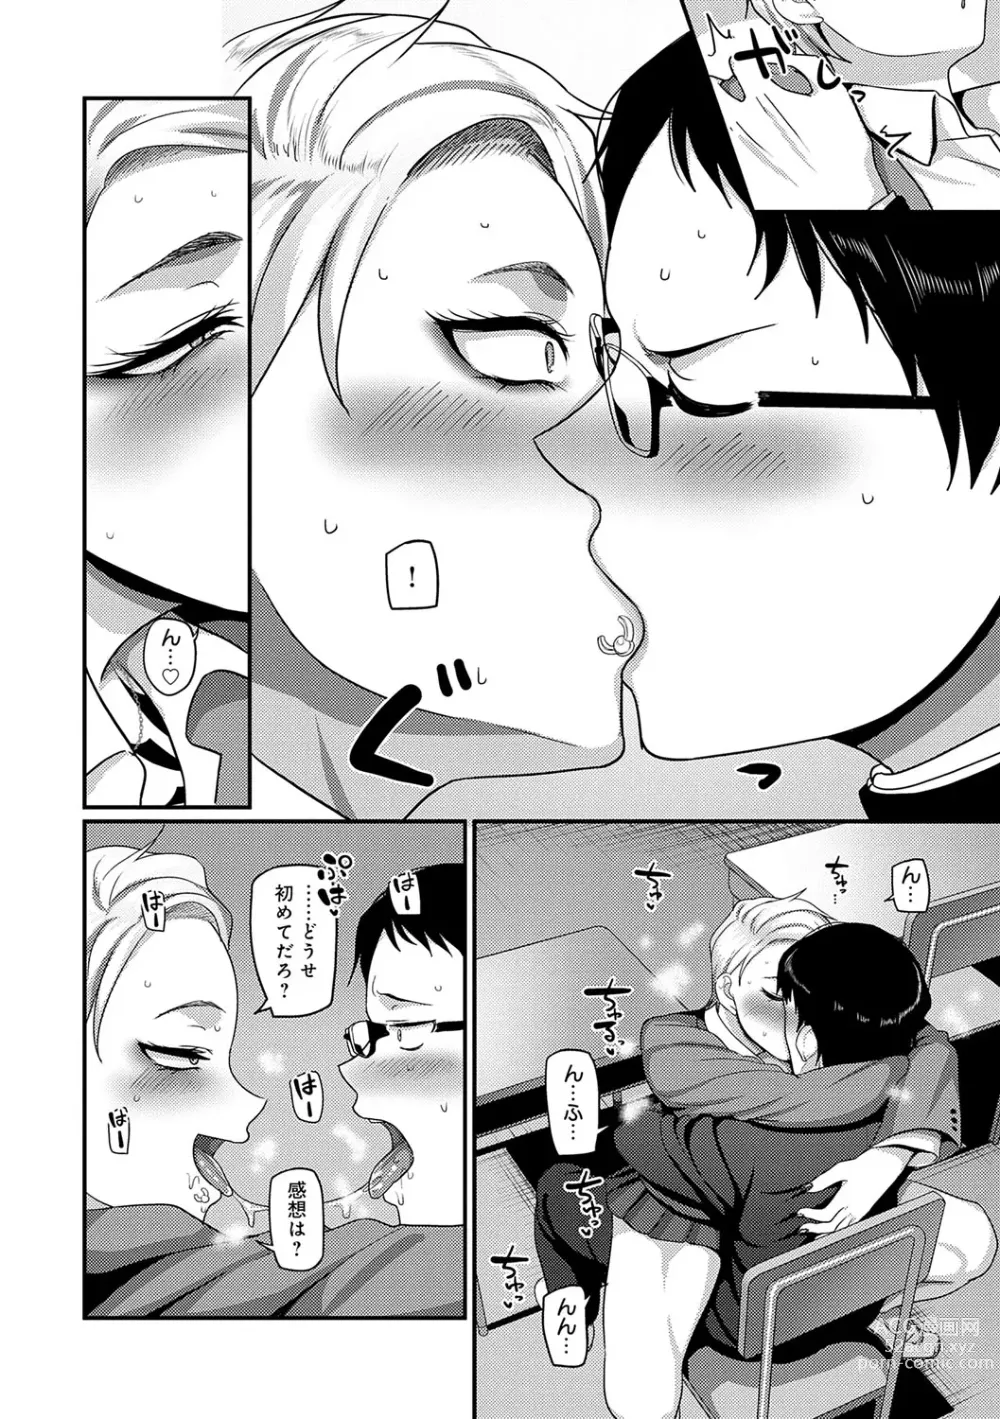 Page 9 of manga Nani Miten da yo! - What are you looking at?